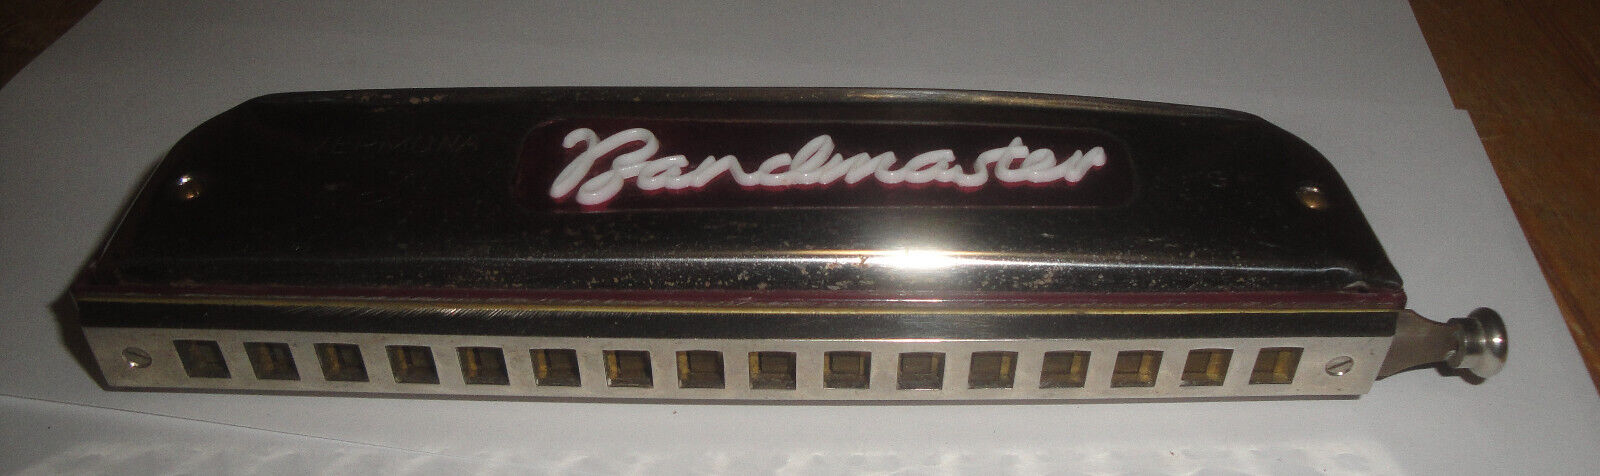 Vintage Vermona Bandmaster Harmonica Germany 7 3/4 in long x 1 3/4 in wide